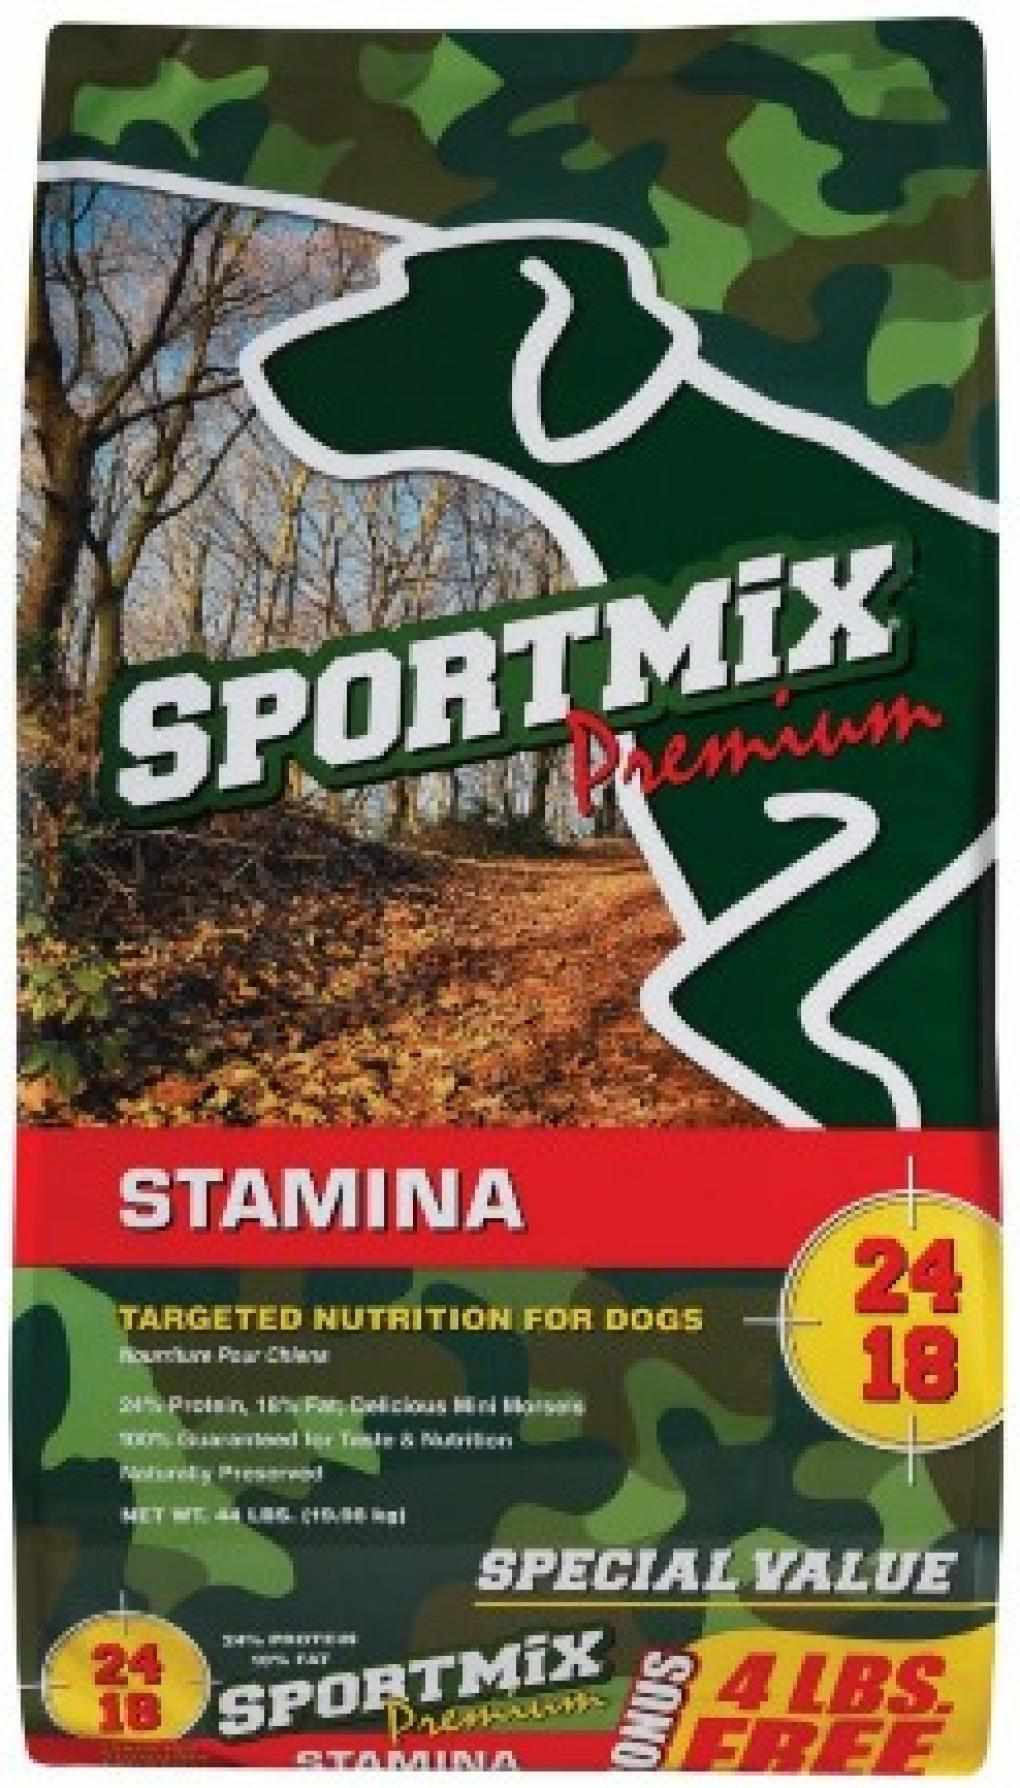 Sportmix Stamina Dog Food